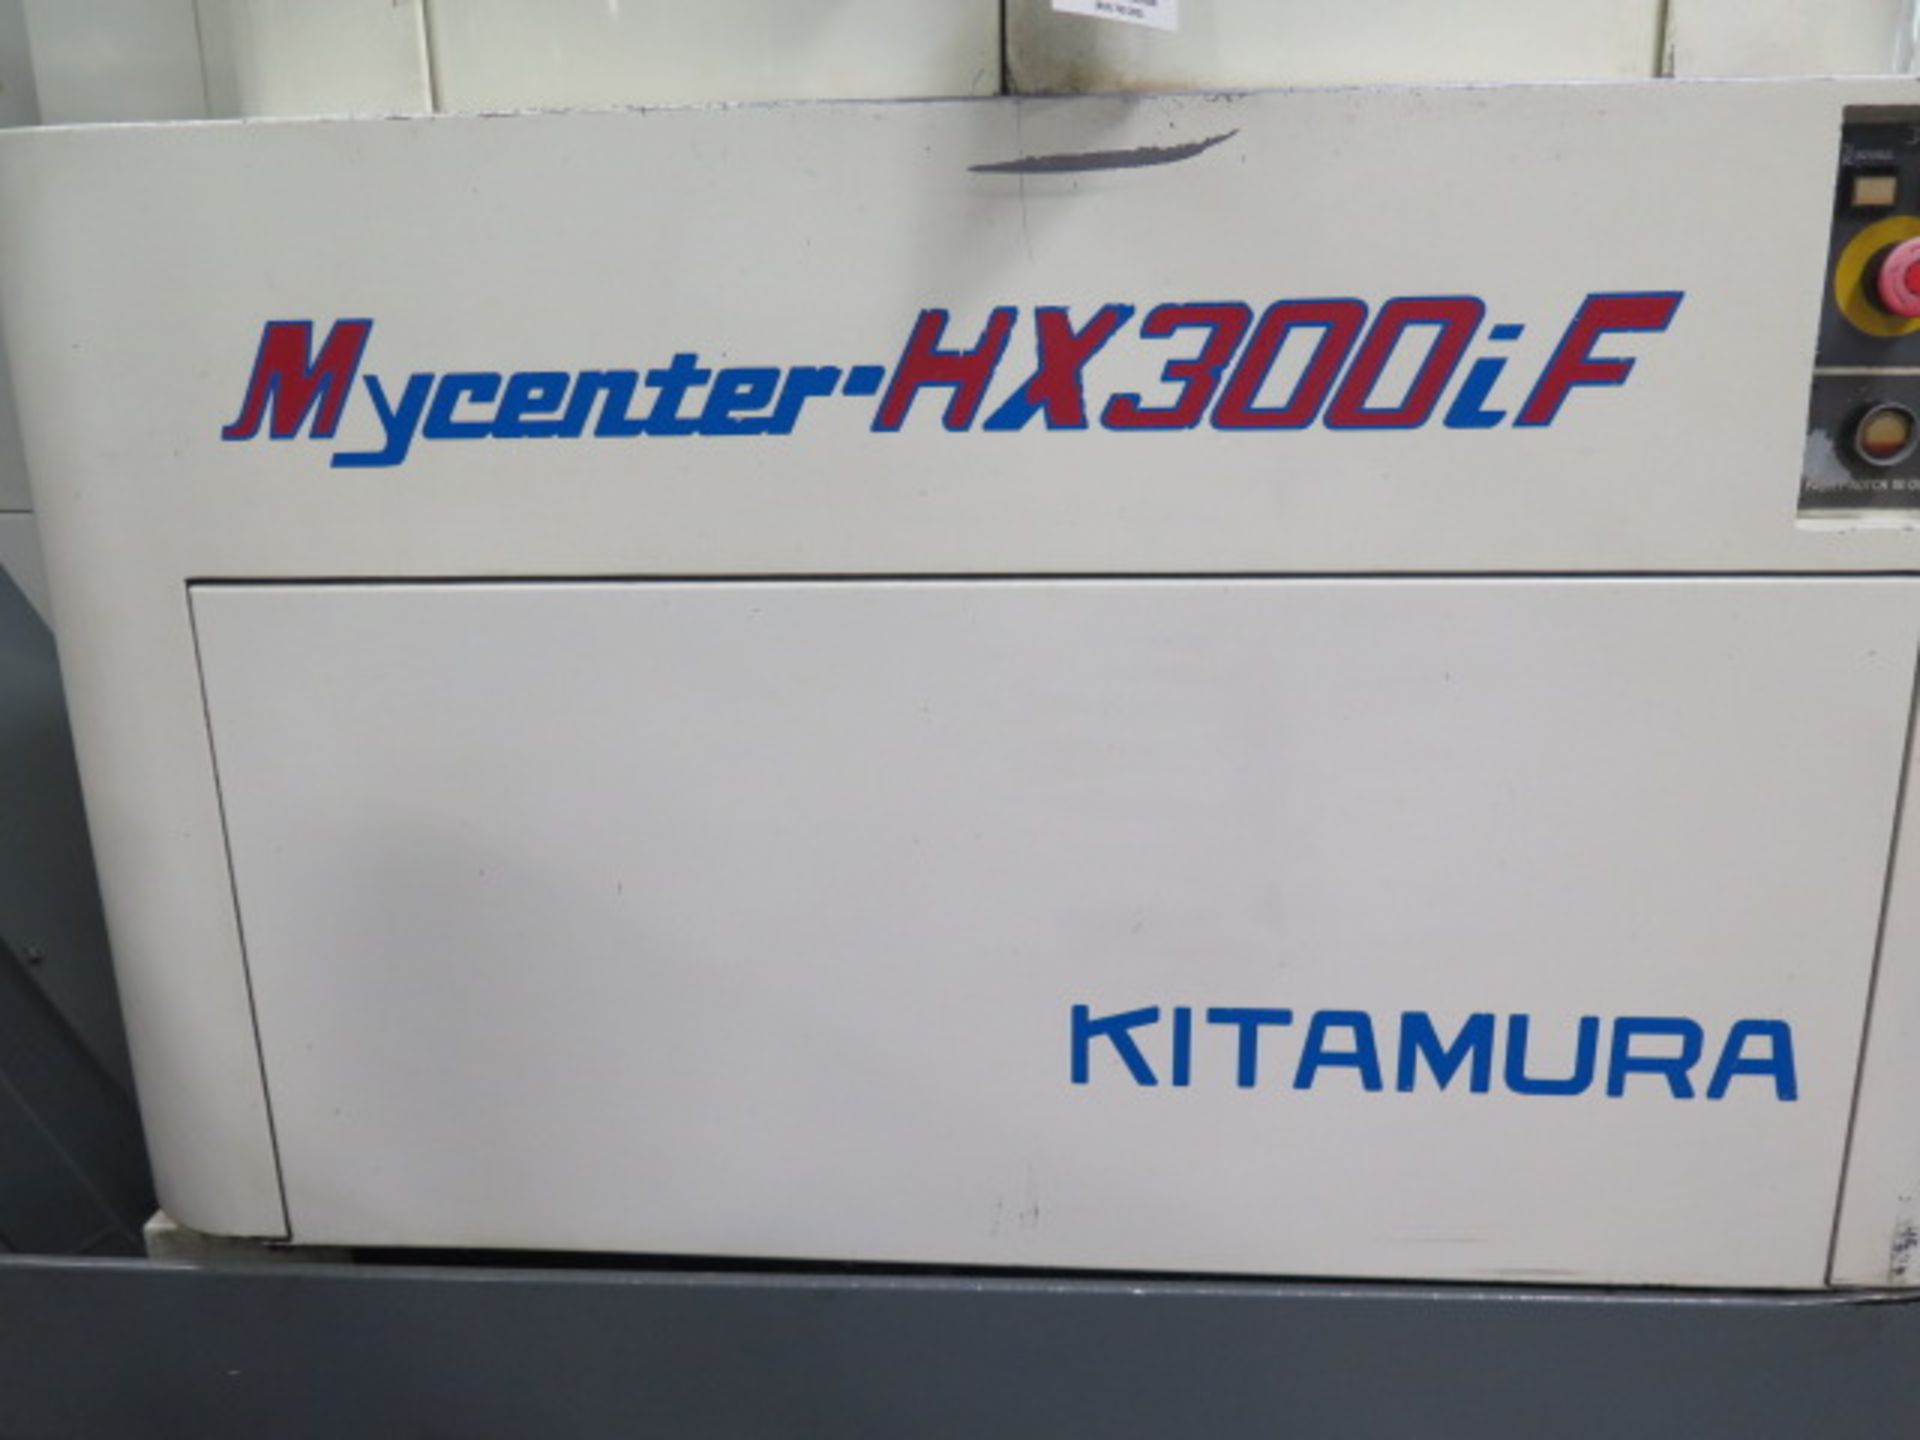 Kitamura Mycenter-HX300iF 2-Pallet 4-Axis CNC Horizontal Machining Center s/n 40802 w/ Fanuc Series - Image 4 of 19